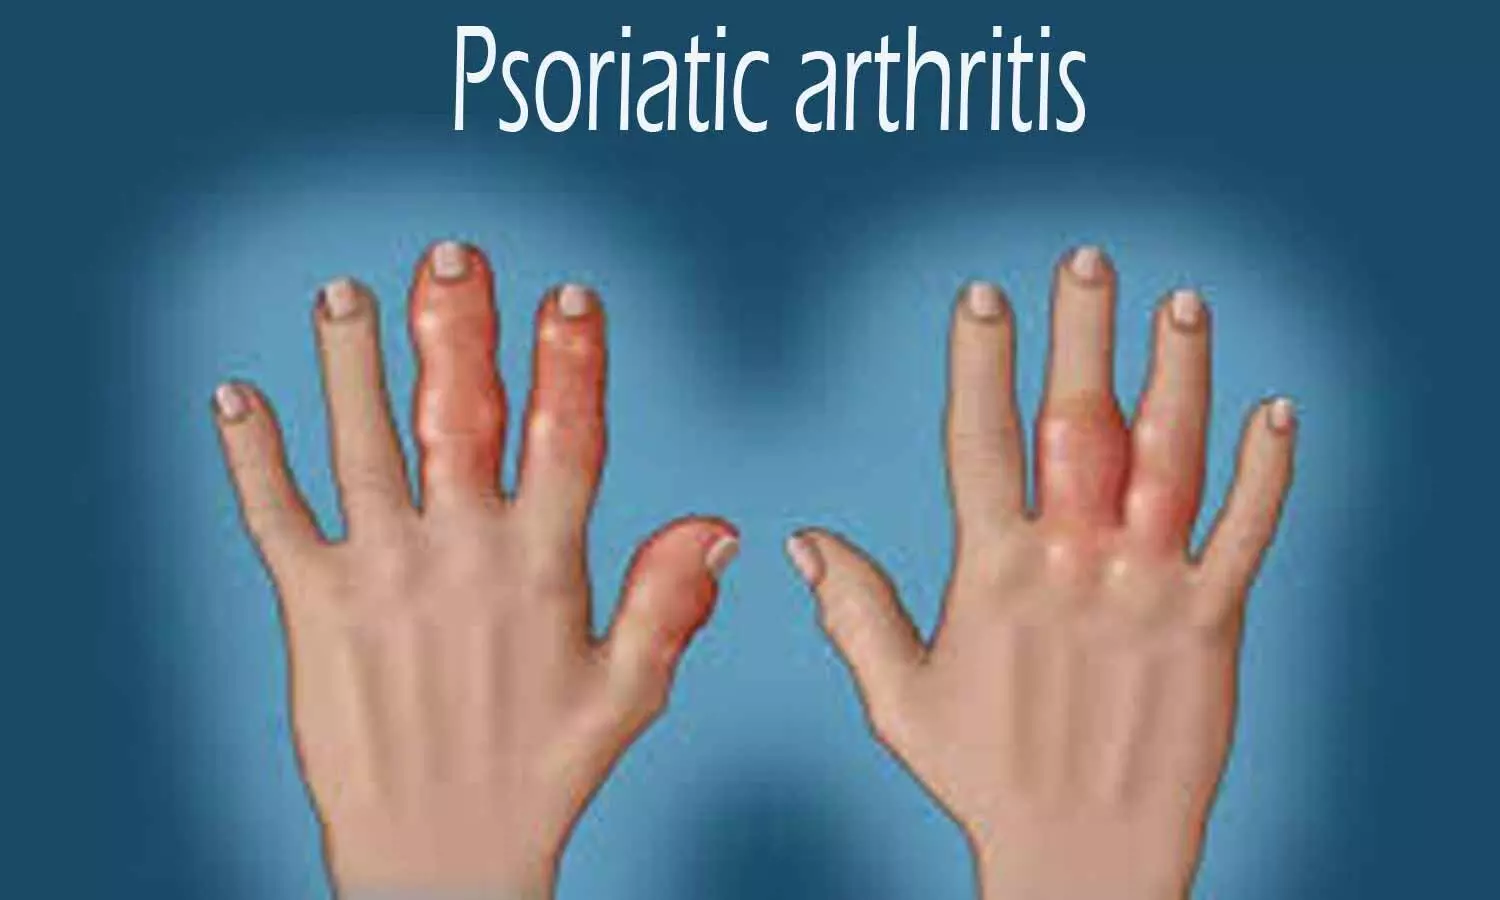 Tofacitinib may benefit Psoriatic Arthritis patients as monotherapy: LANCET study